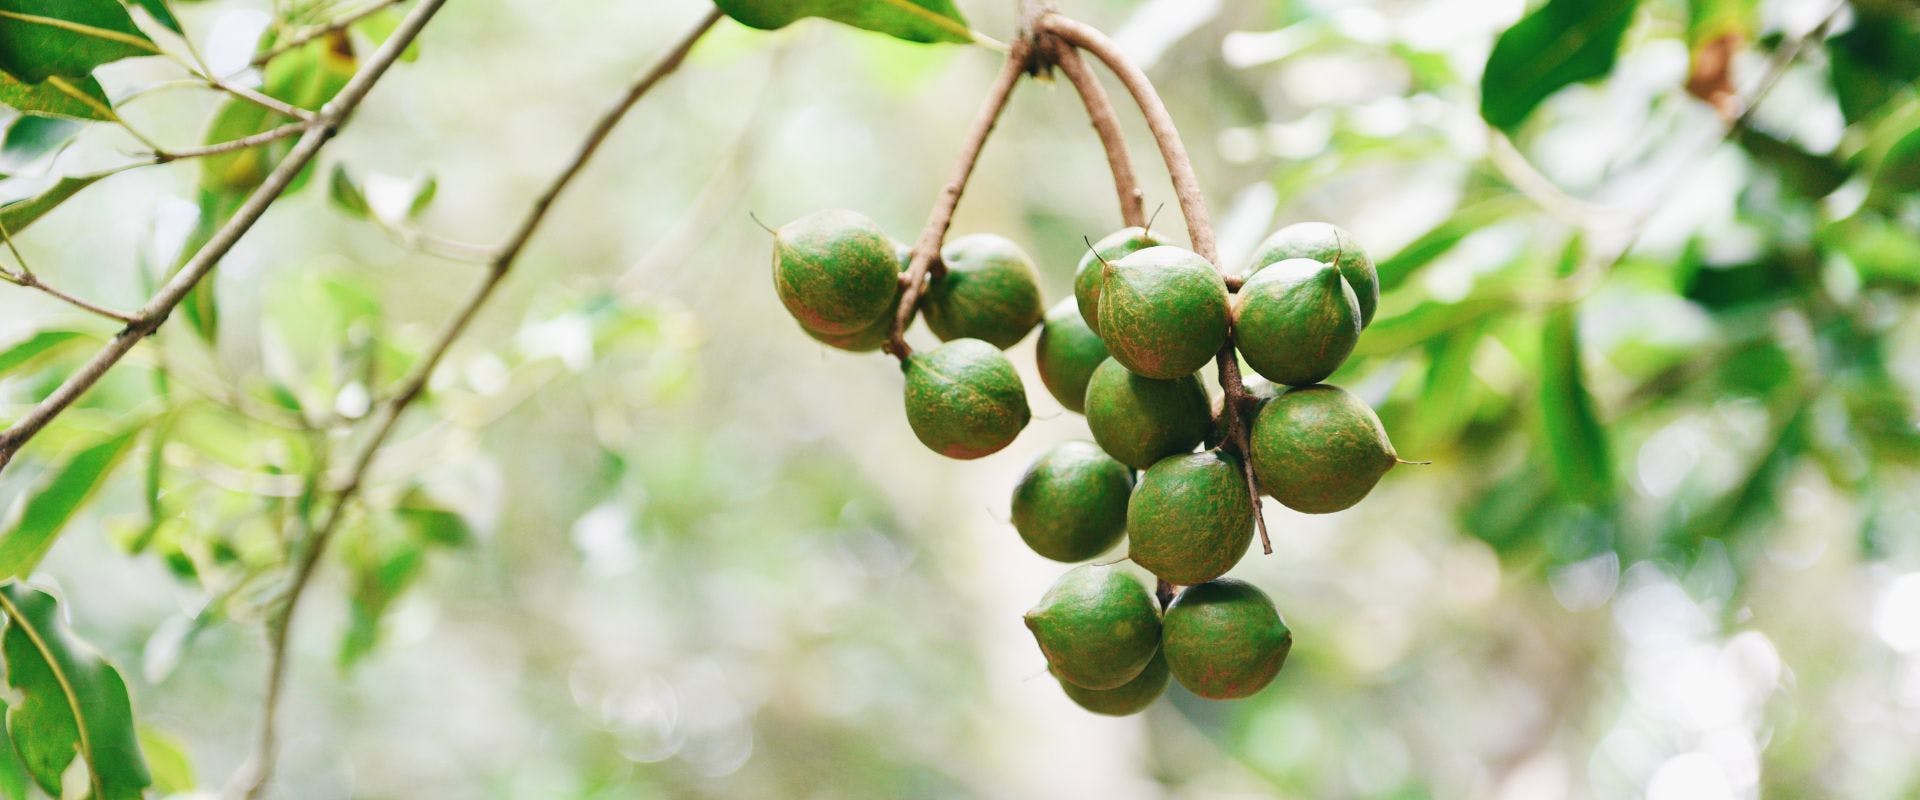 Macadamia nuts growing on tree